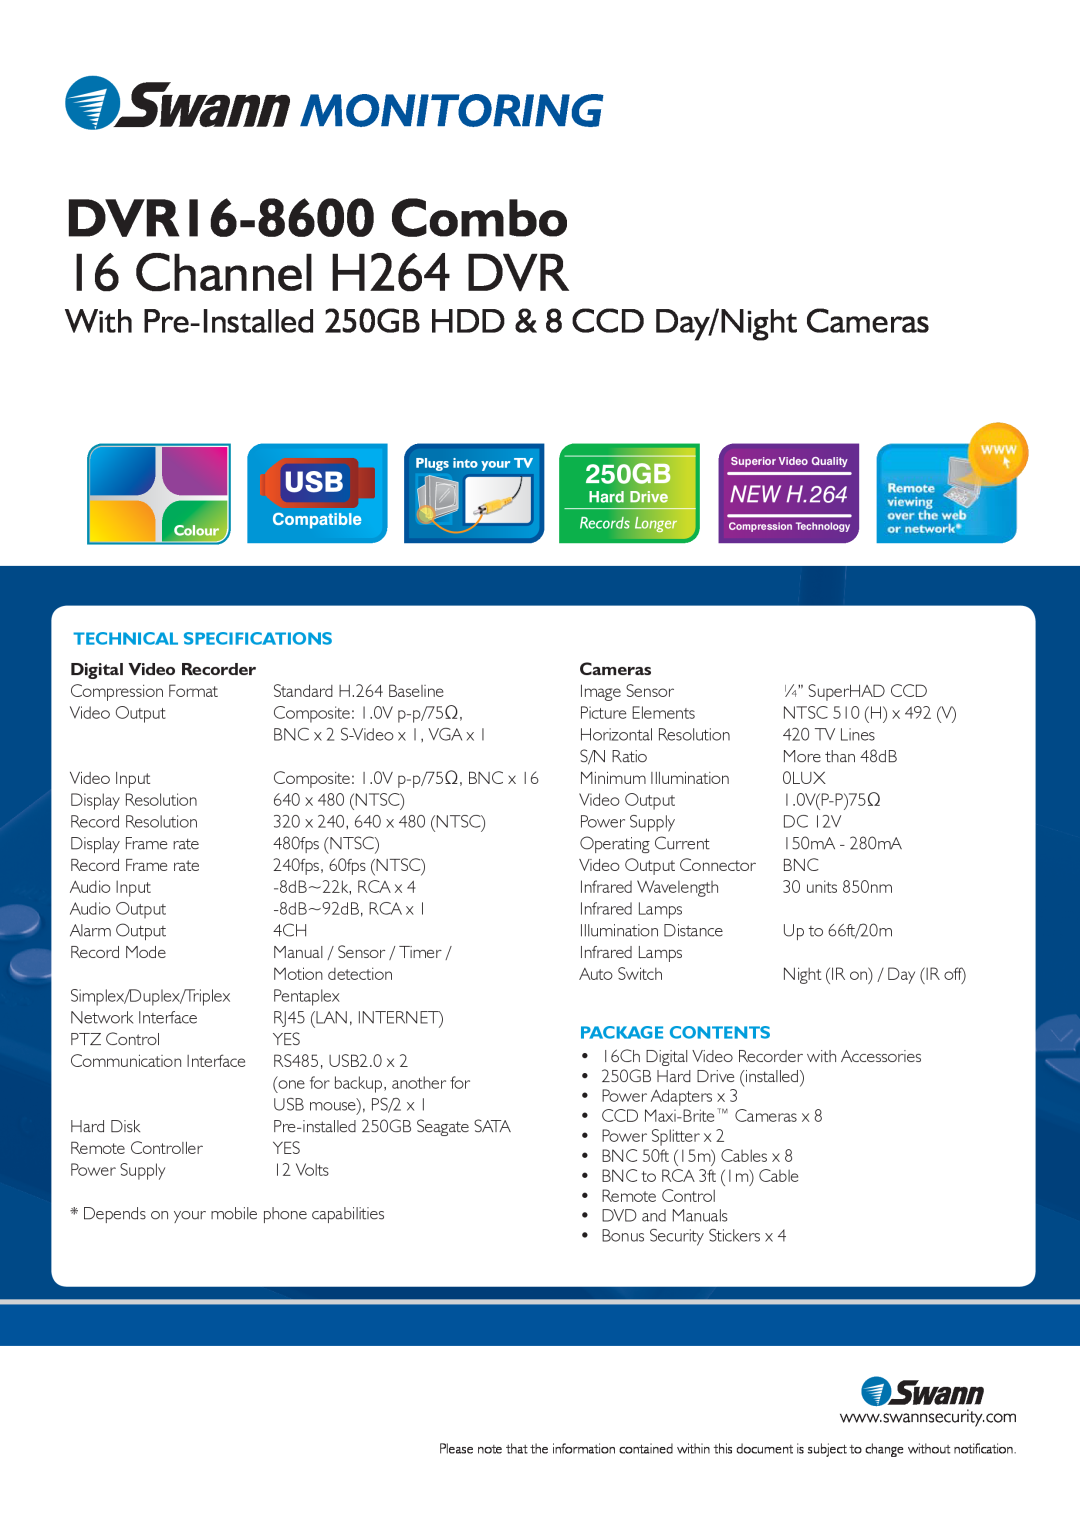 Swann SW244-HMB warranty Digital Video Recorder, Cameras, DVR16-8600 Combo, Channel H264 DVR, Monitoring, 250GB, NEW H.264 